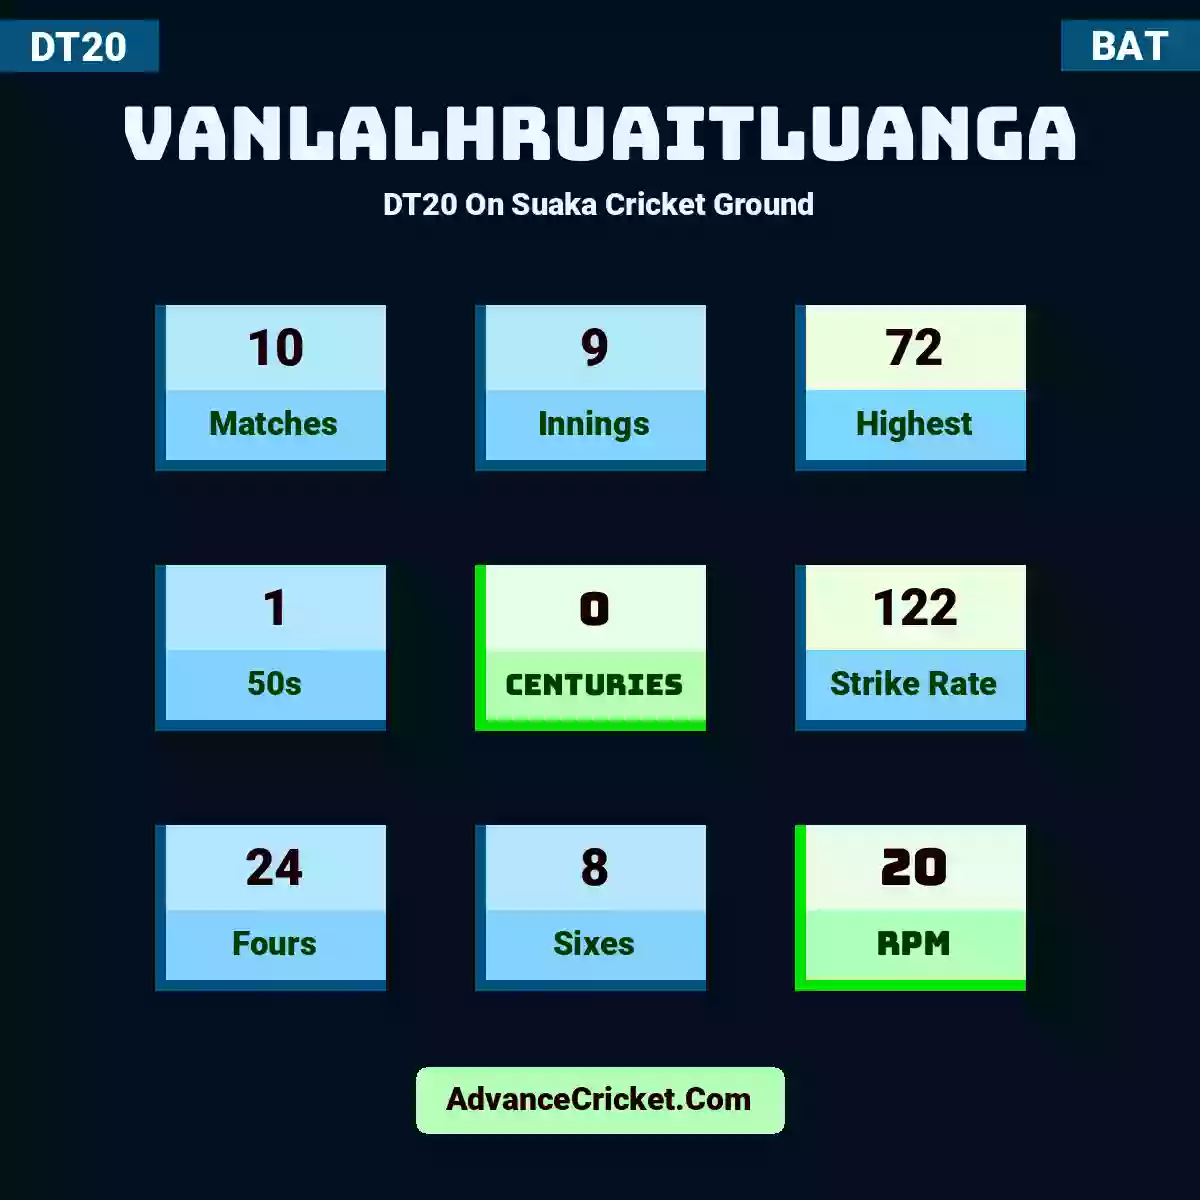 Vanlalhruaitluanga DT20  On Suaka Cricket Ground, Vanlalhruaitluanga played 10 matches, scored 72 runs as highest, 1 half-centuries, and 0 centuries, with a strike rate of 122. Vanlalhruaitluanga hit 24 fours and 8 sixes, with an RPM of 20.